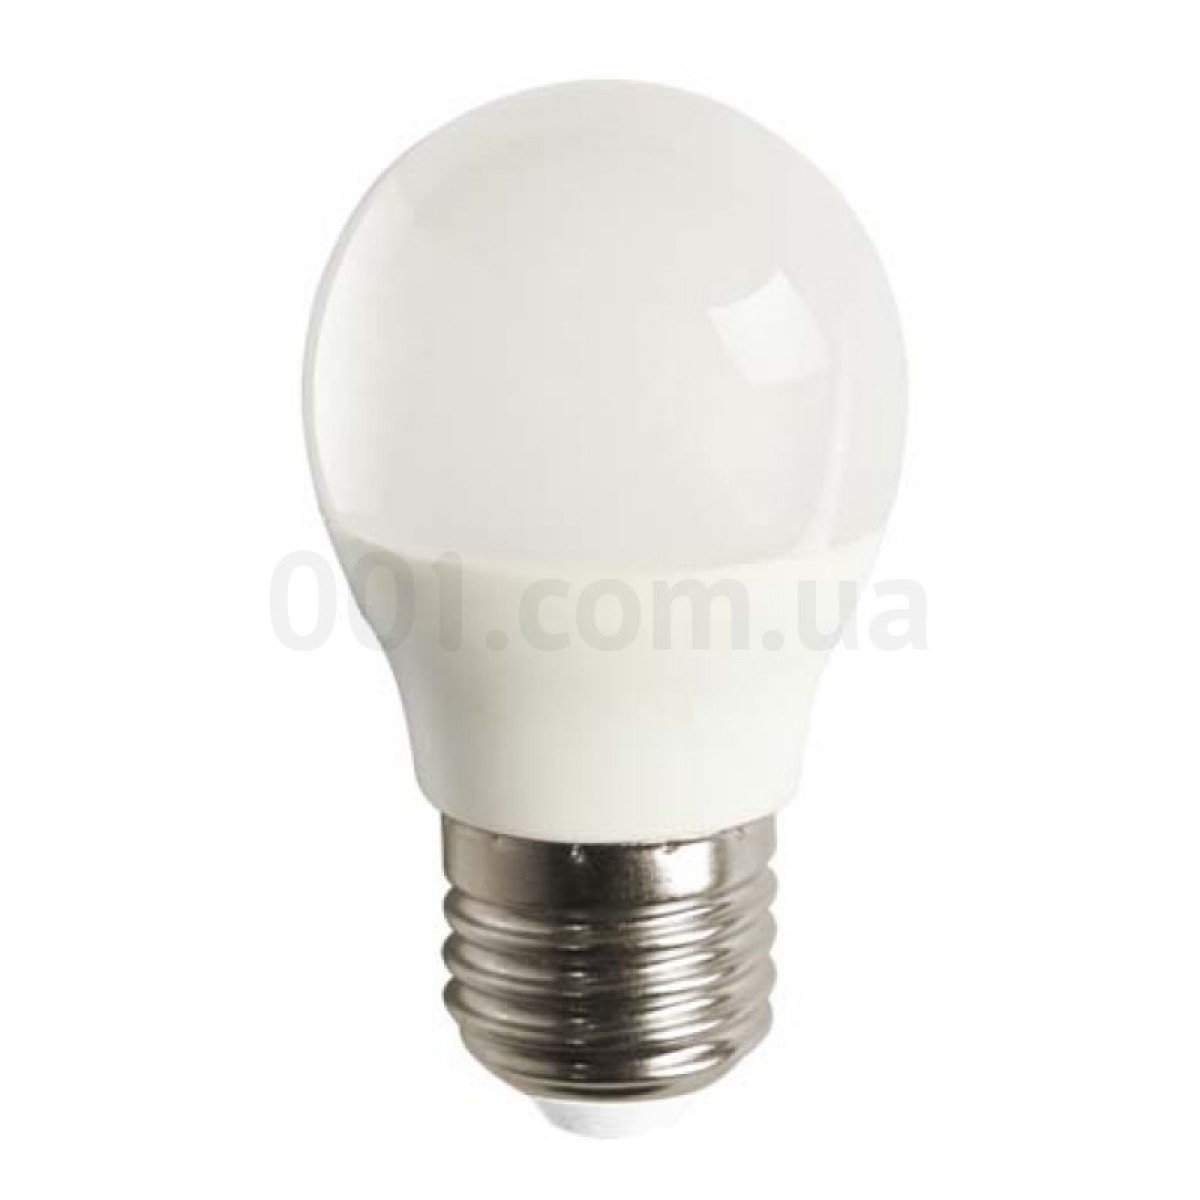 Светодиодная лампа LB-380 G45 (шар) 4Вт 4000K E27, Feron 256_256.jpg